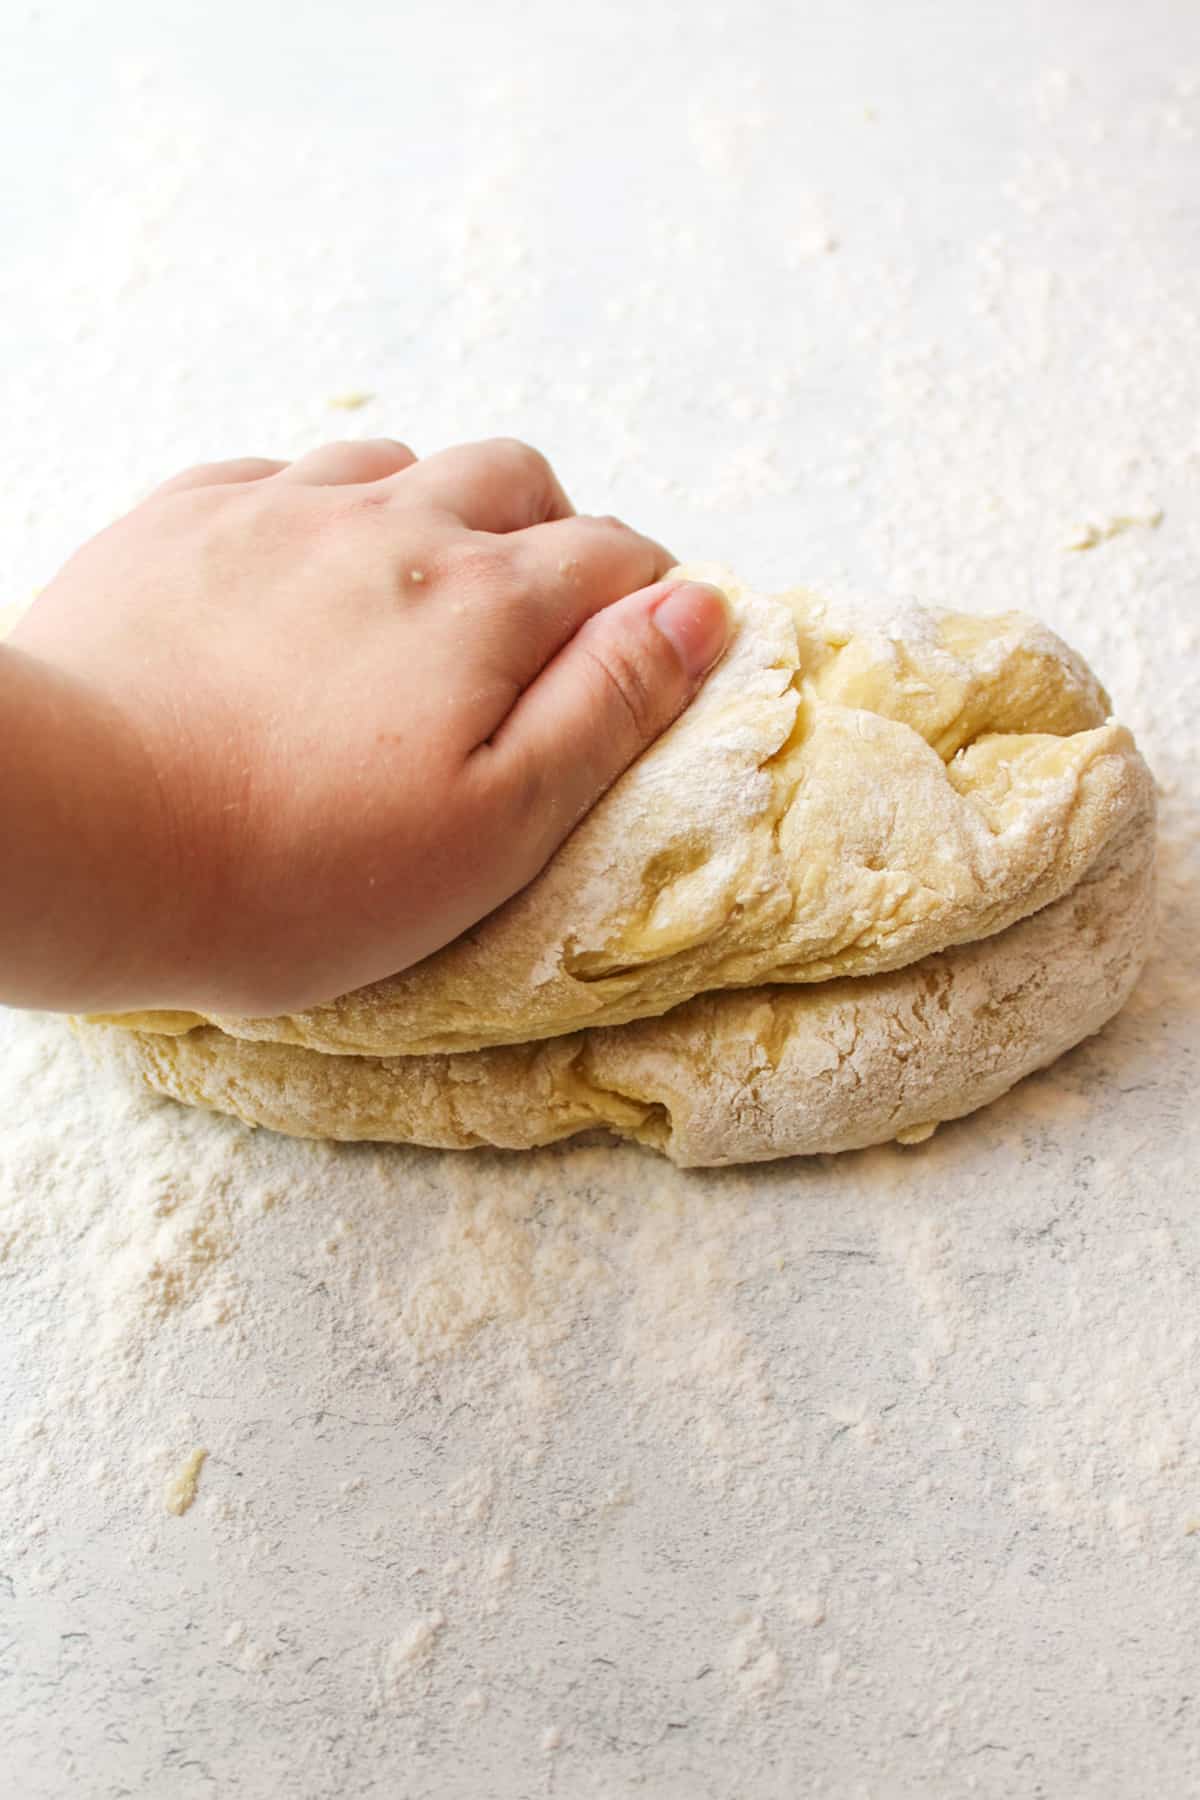 a hand kneading the dough.